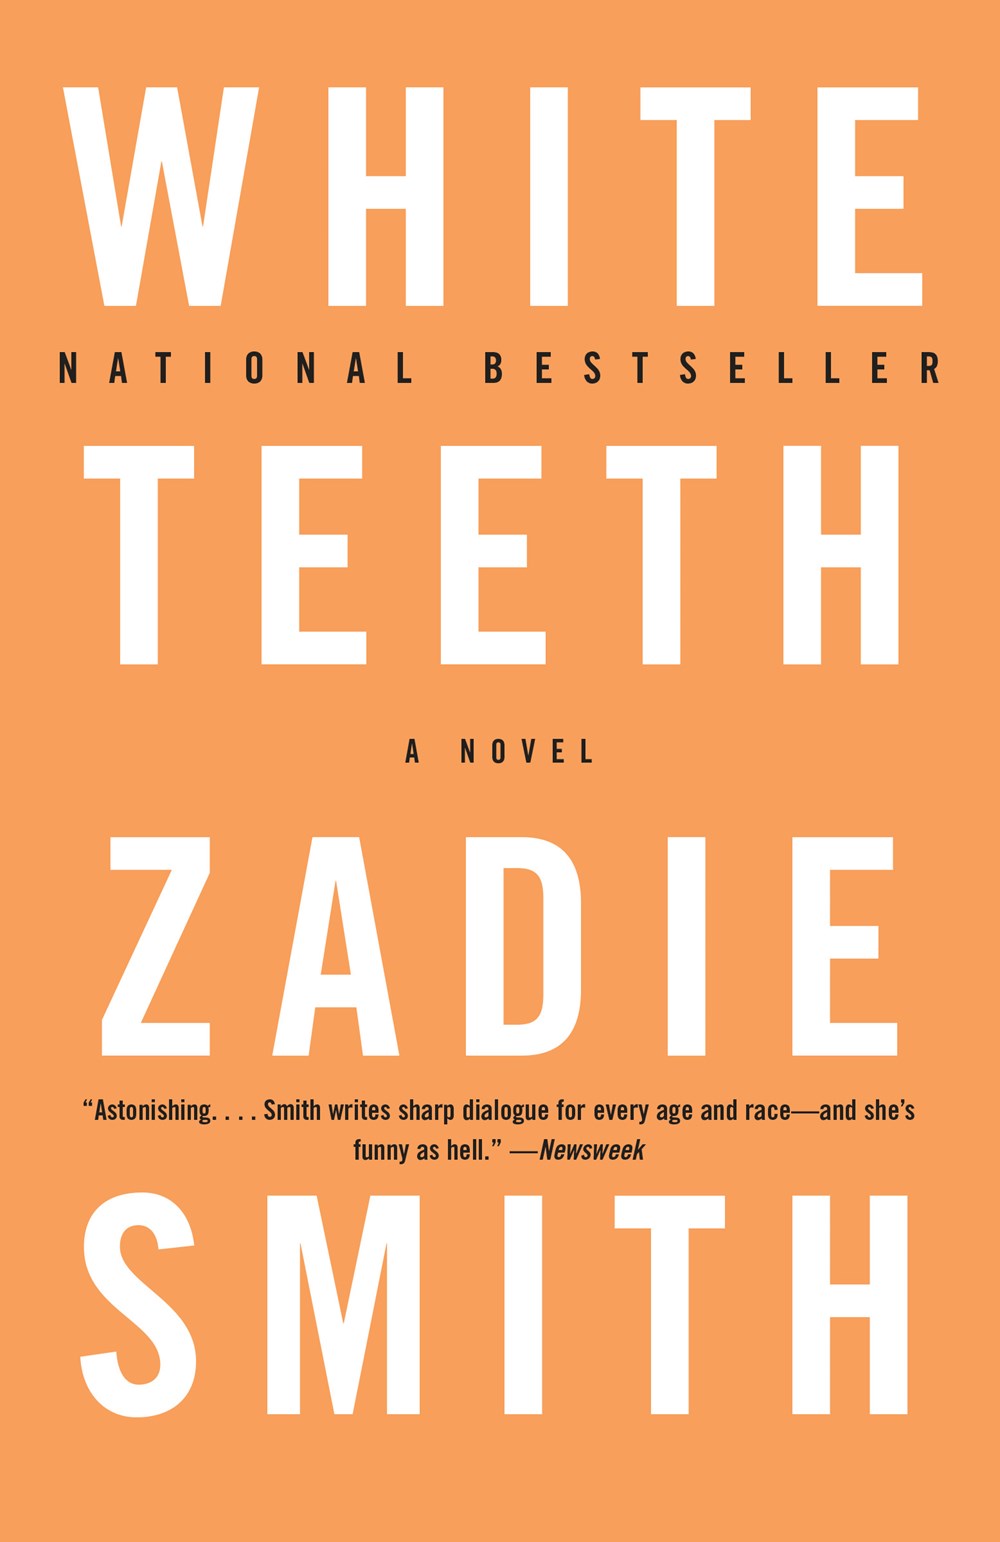 White Teeth: A Novel by Zadie Smith